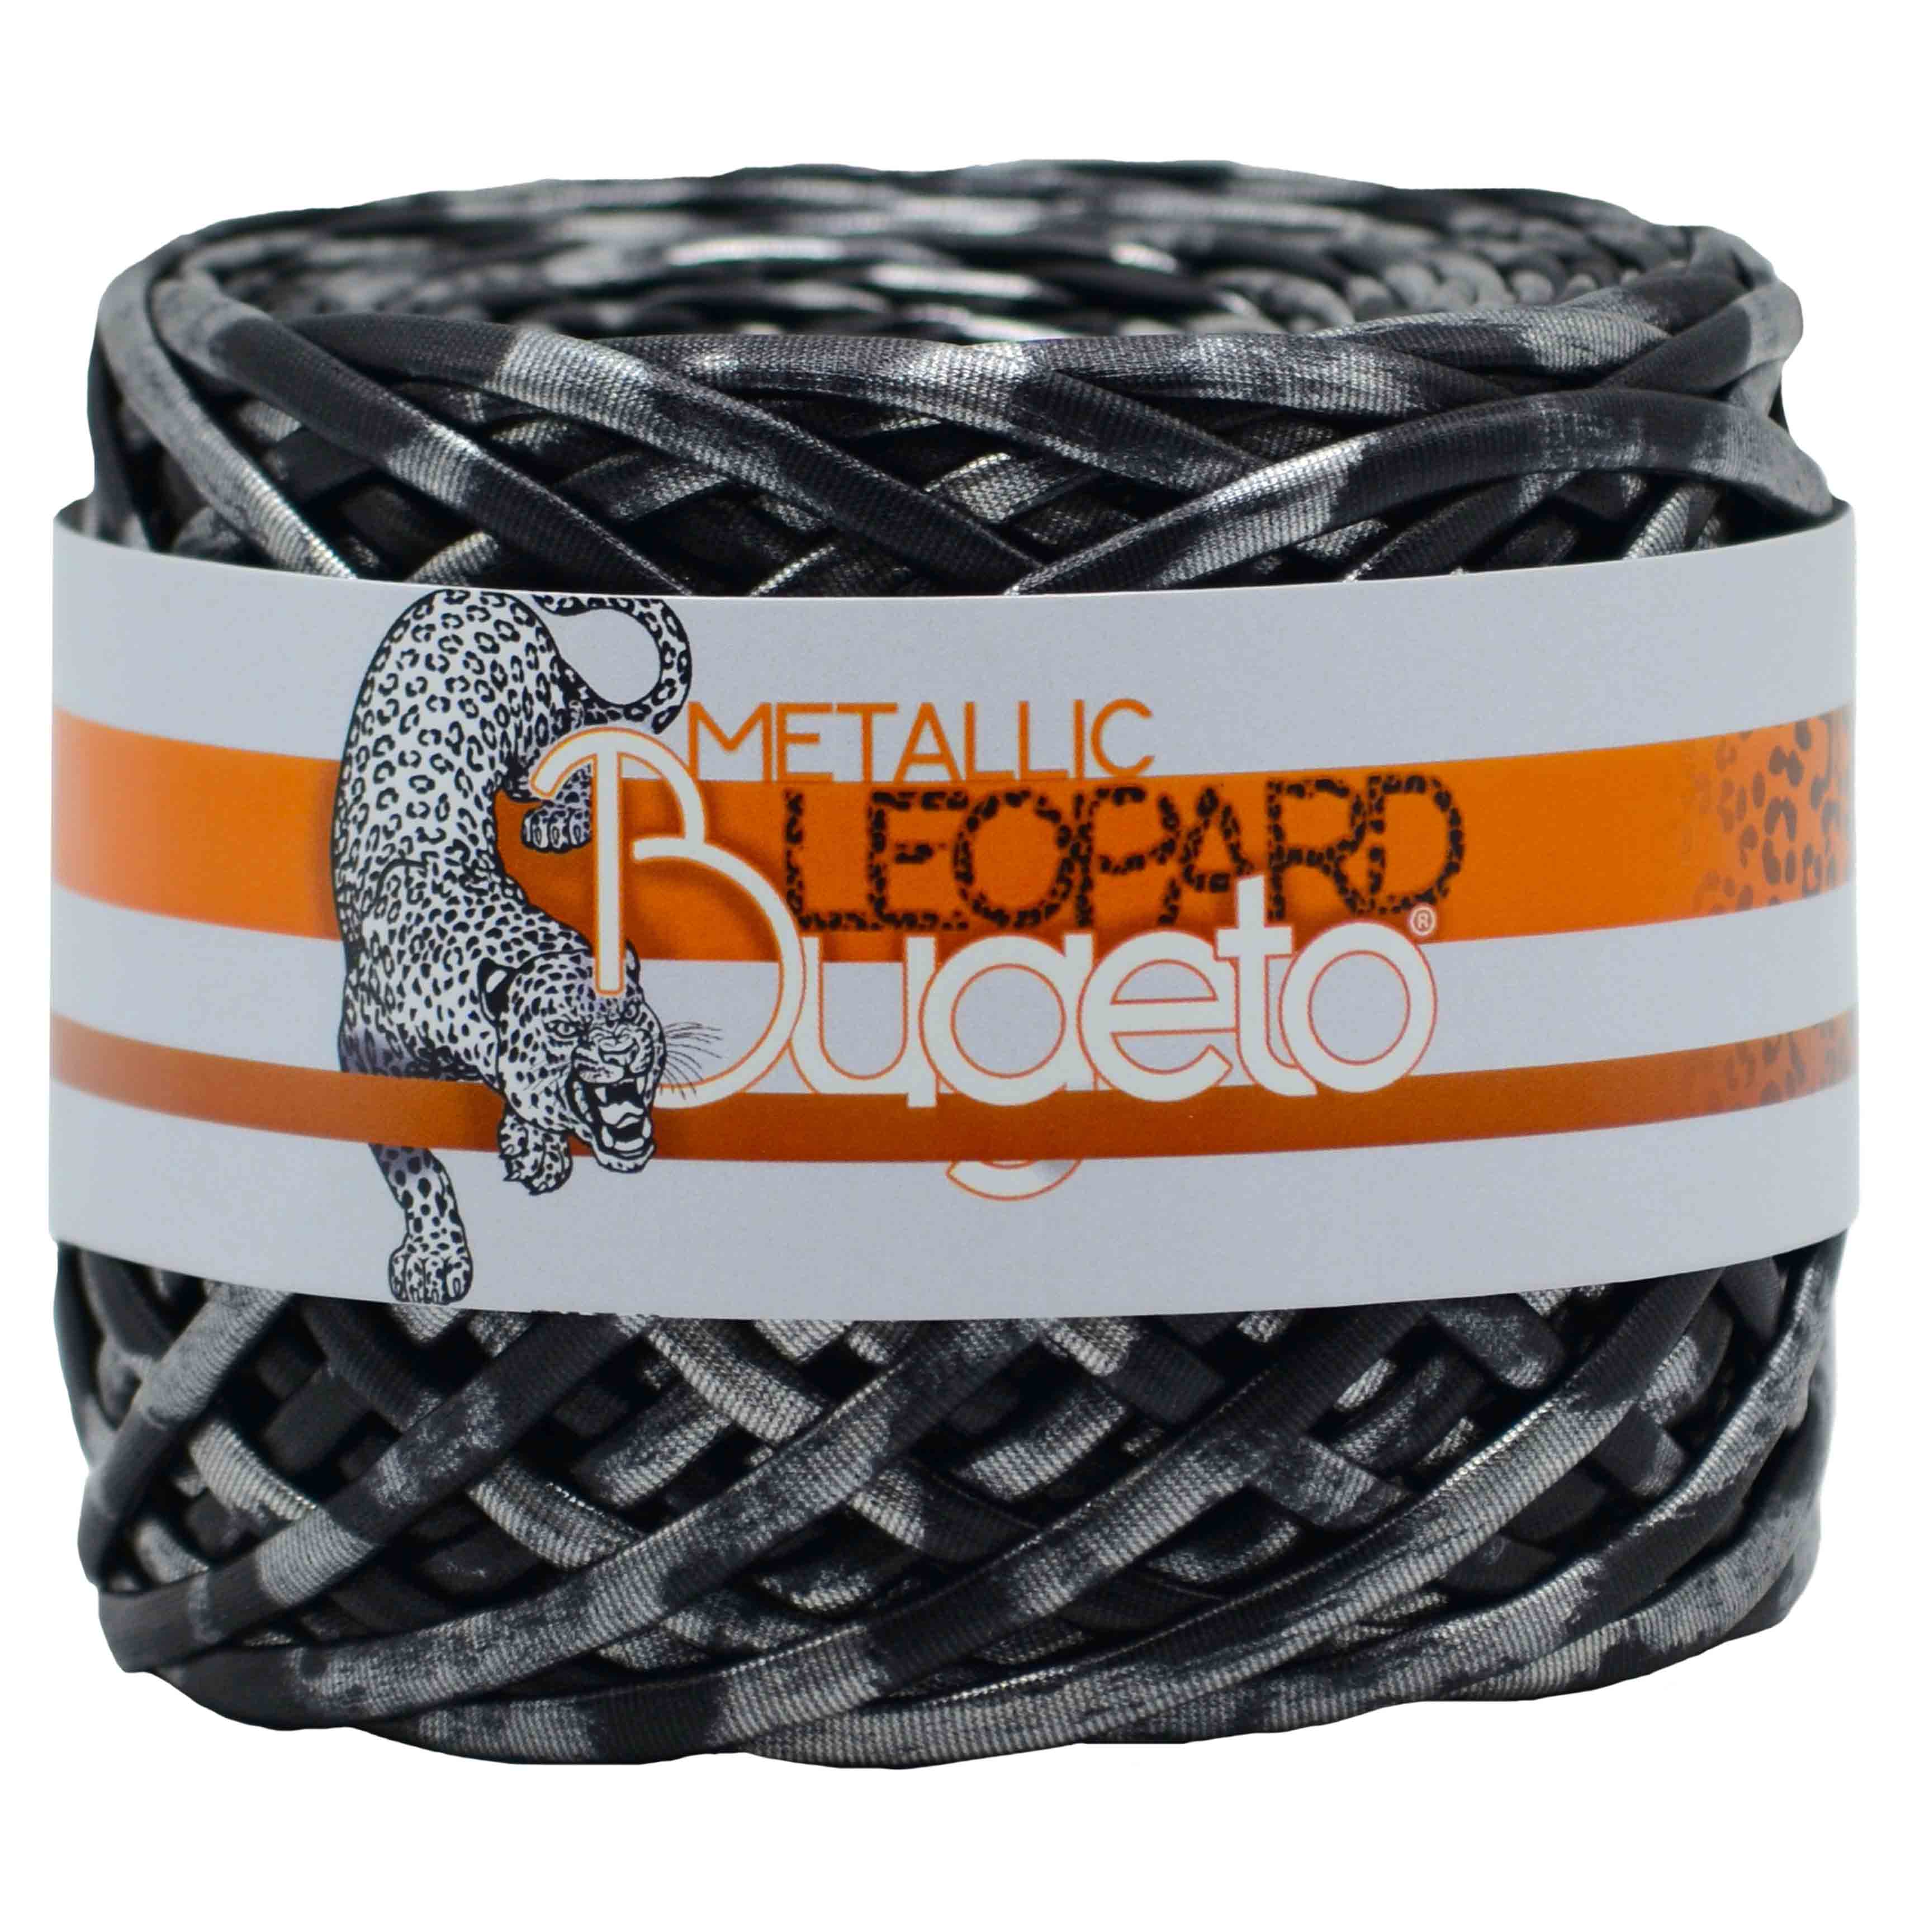 metallic leopard yarns bugeto yarn